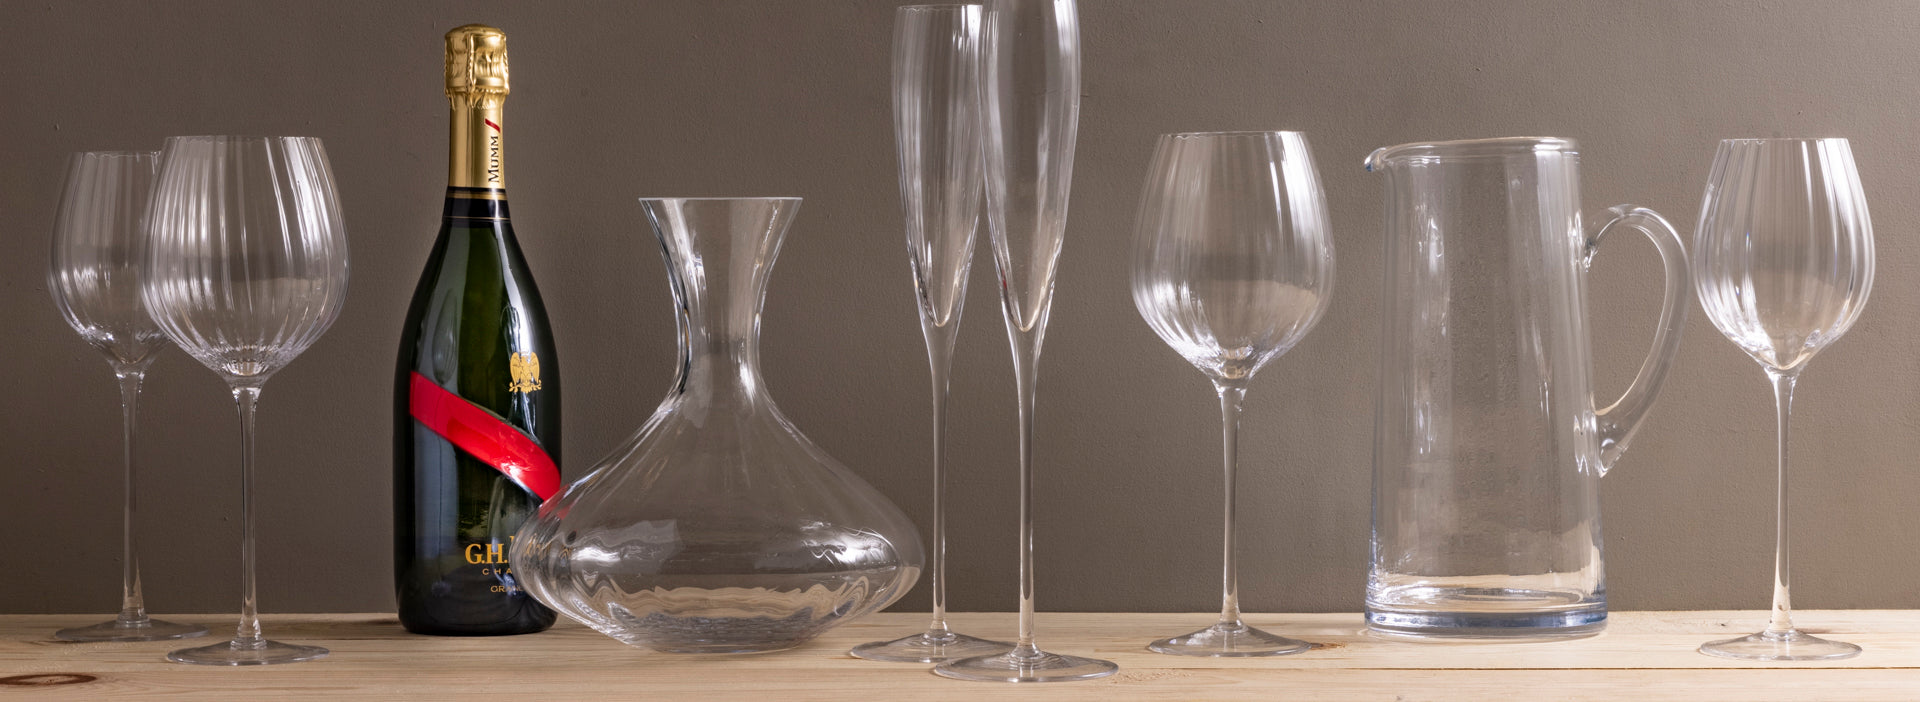 Elegant Crystal Stemware Set of 4 Red Wine Glasses